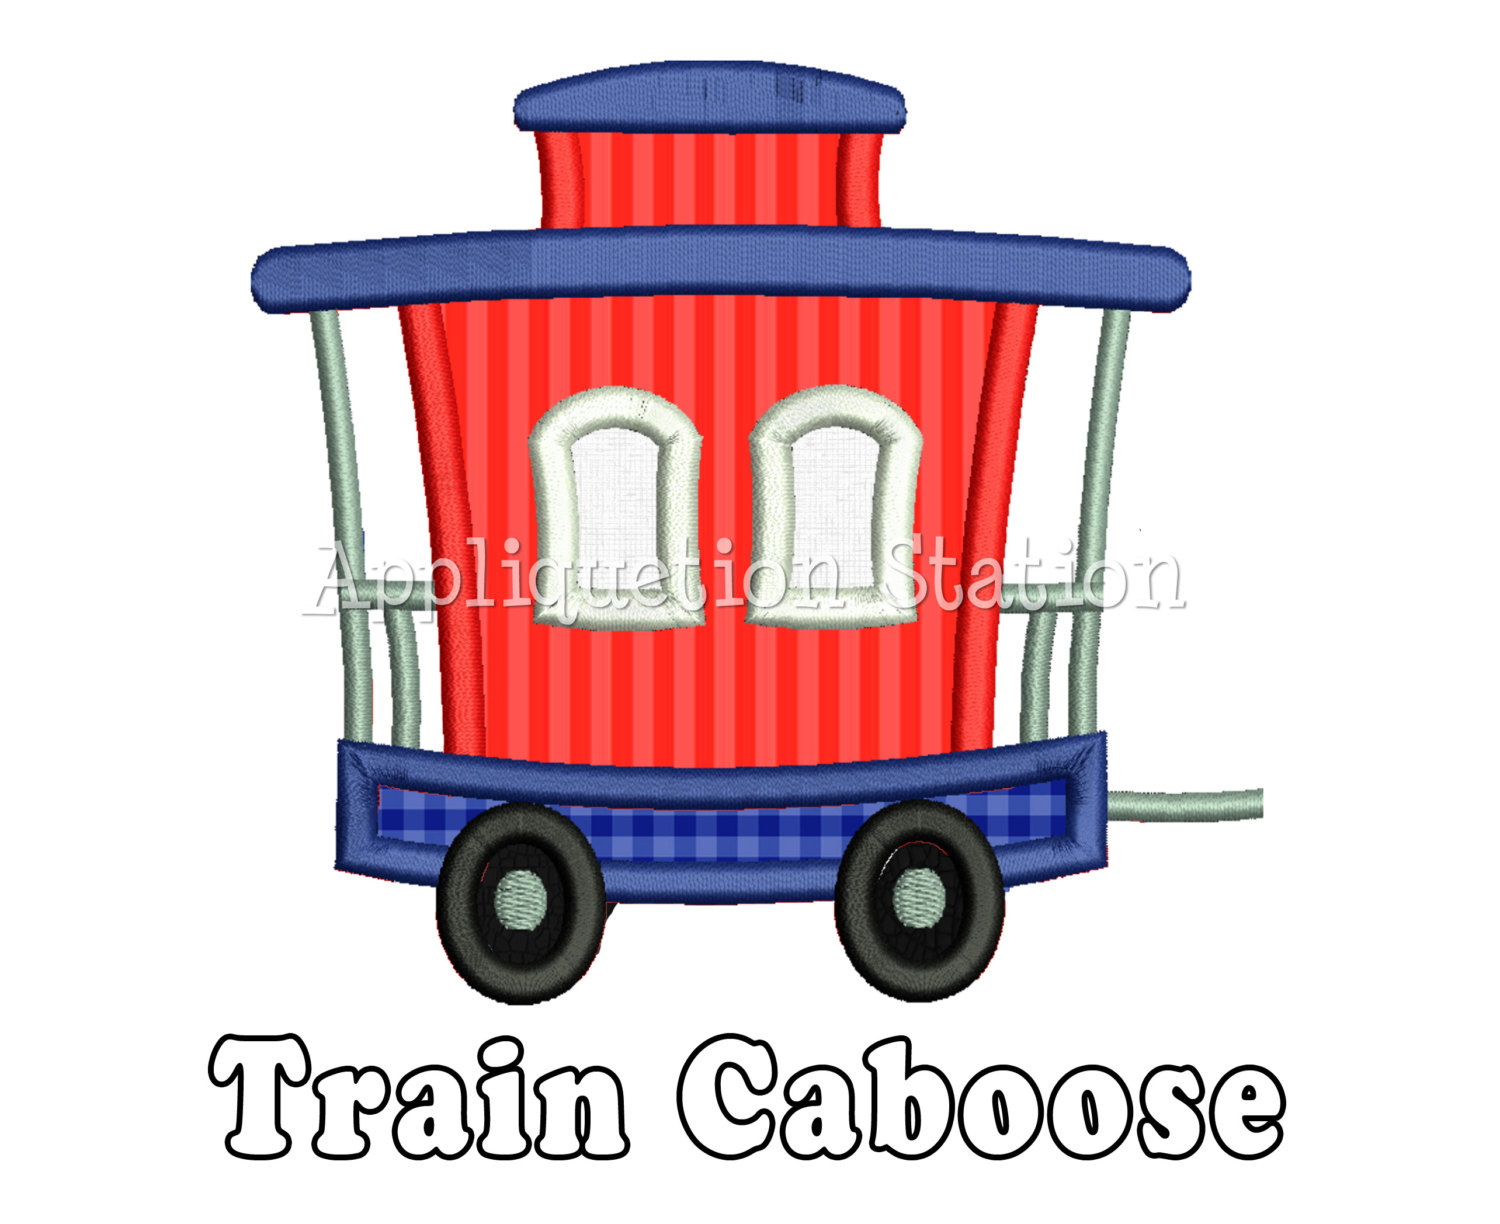 Caboose Clipart #14435 - Caboose Clip Art